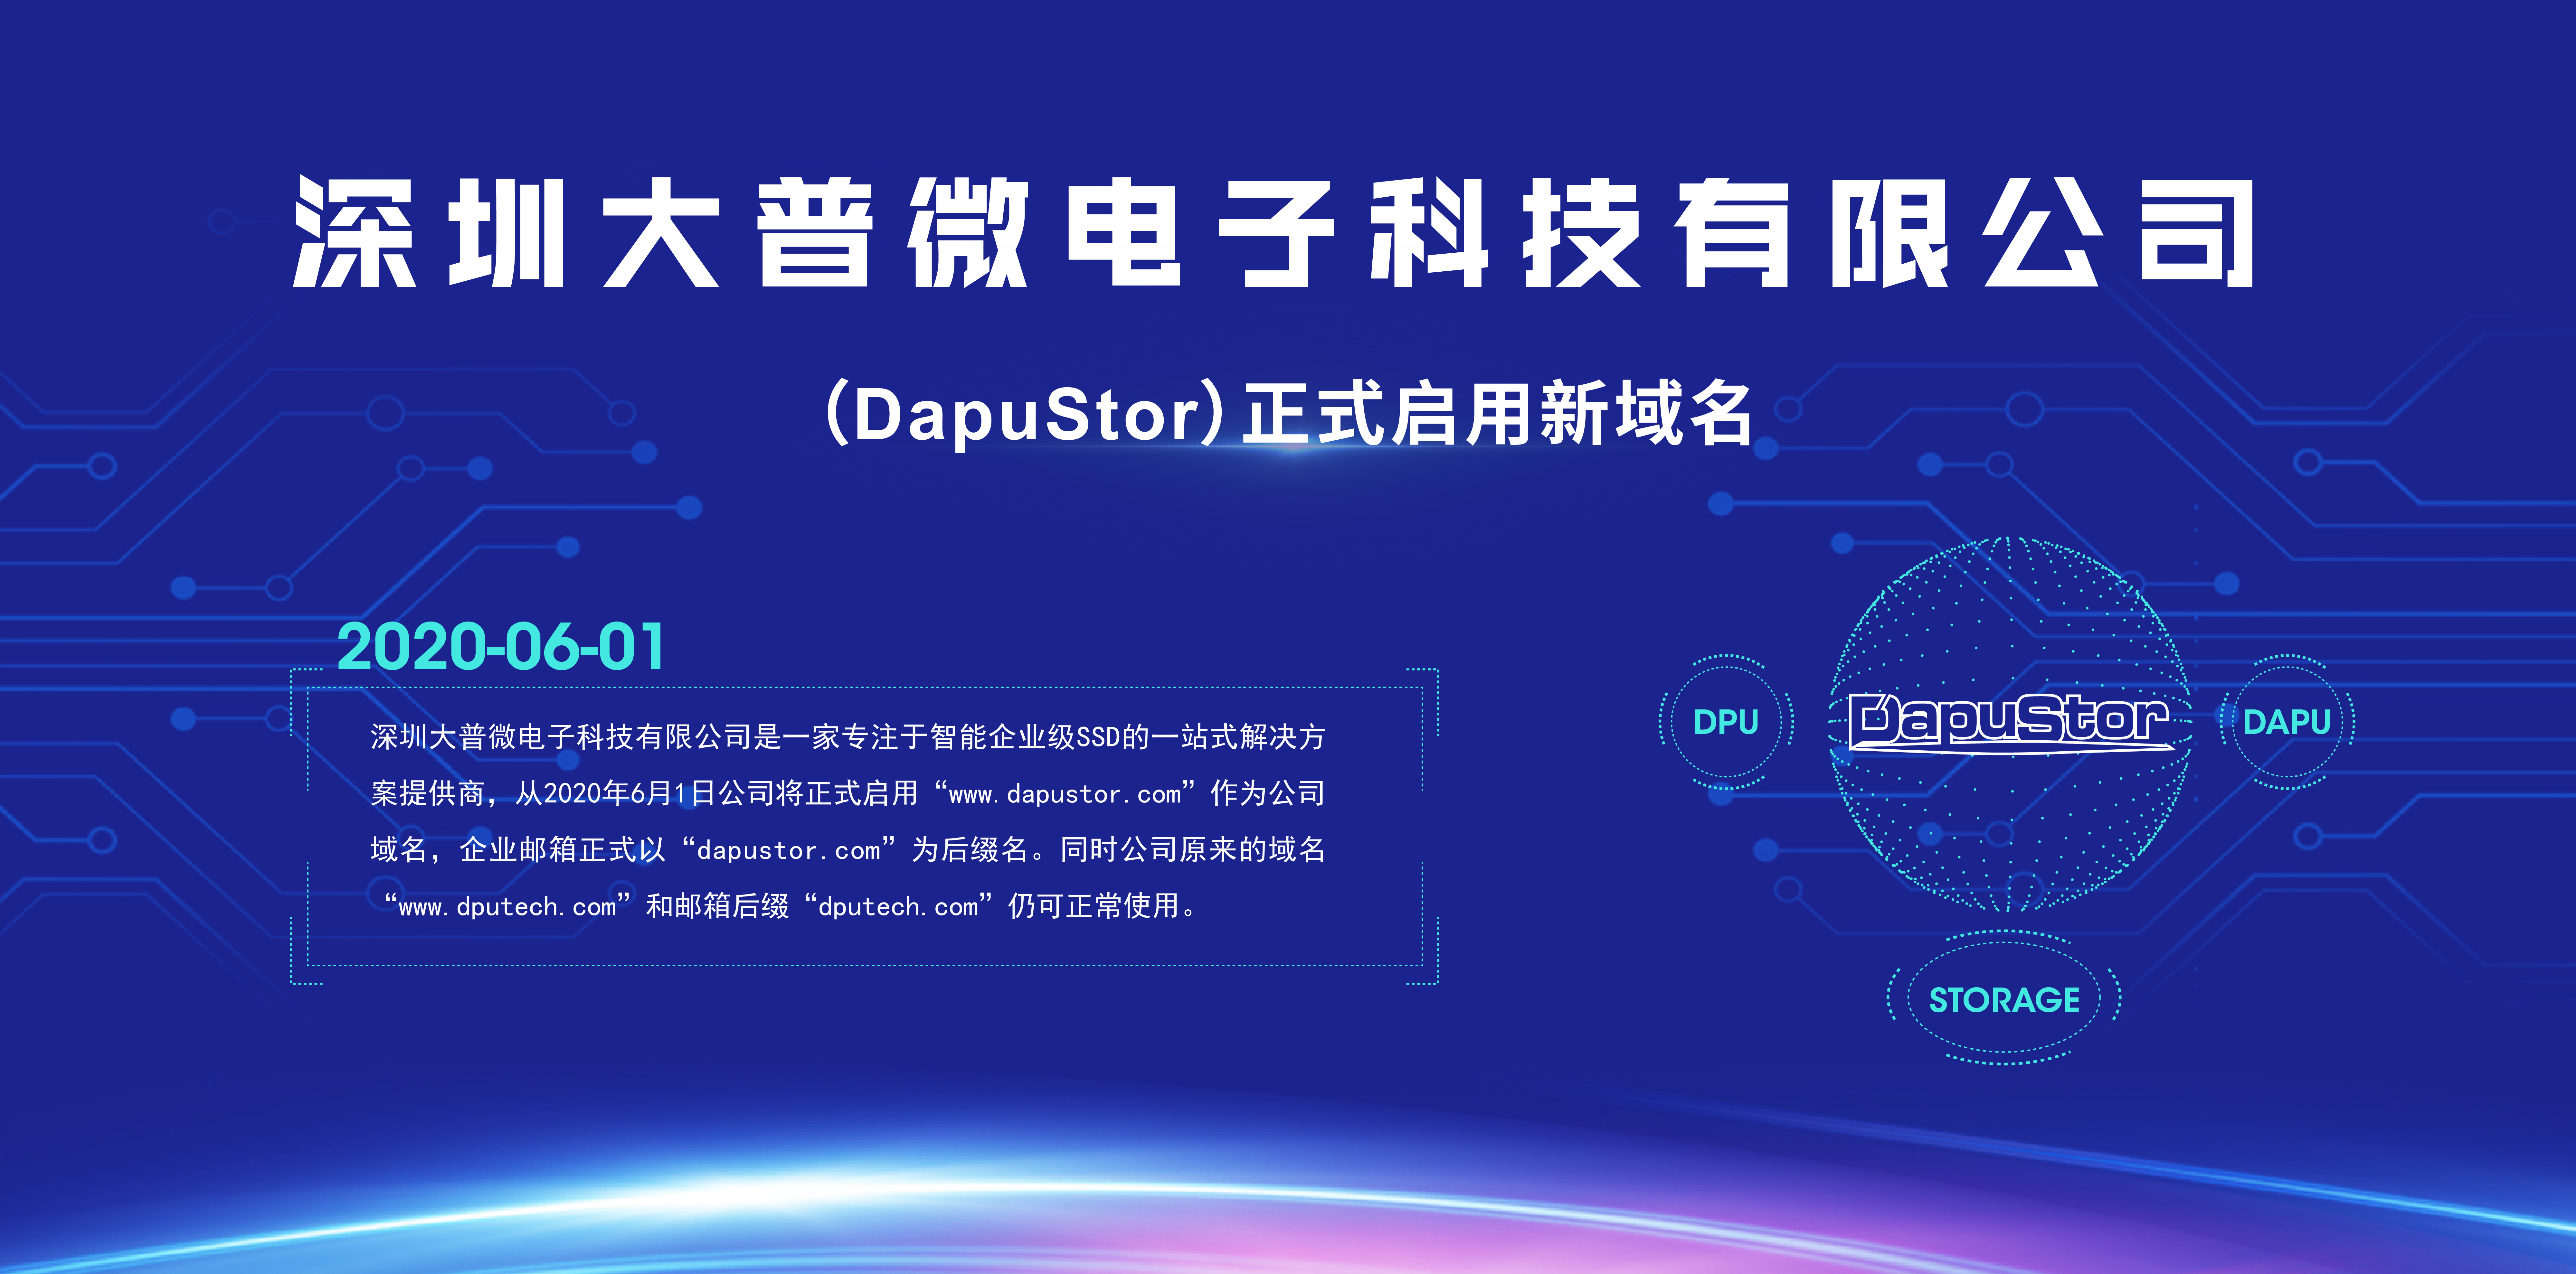 DapuStor正式启用新域名